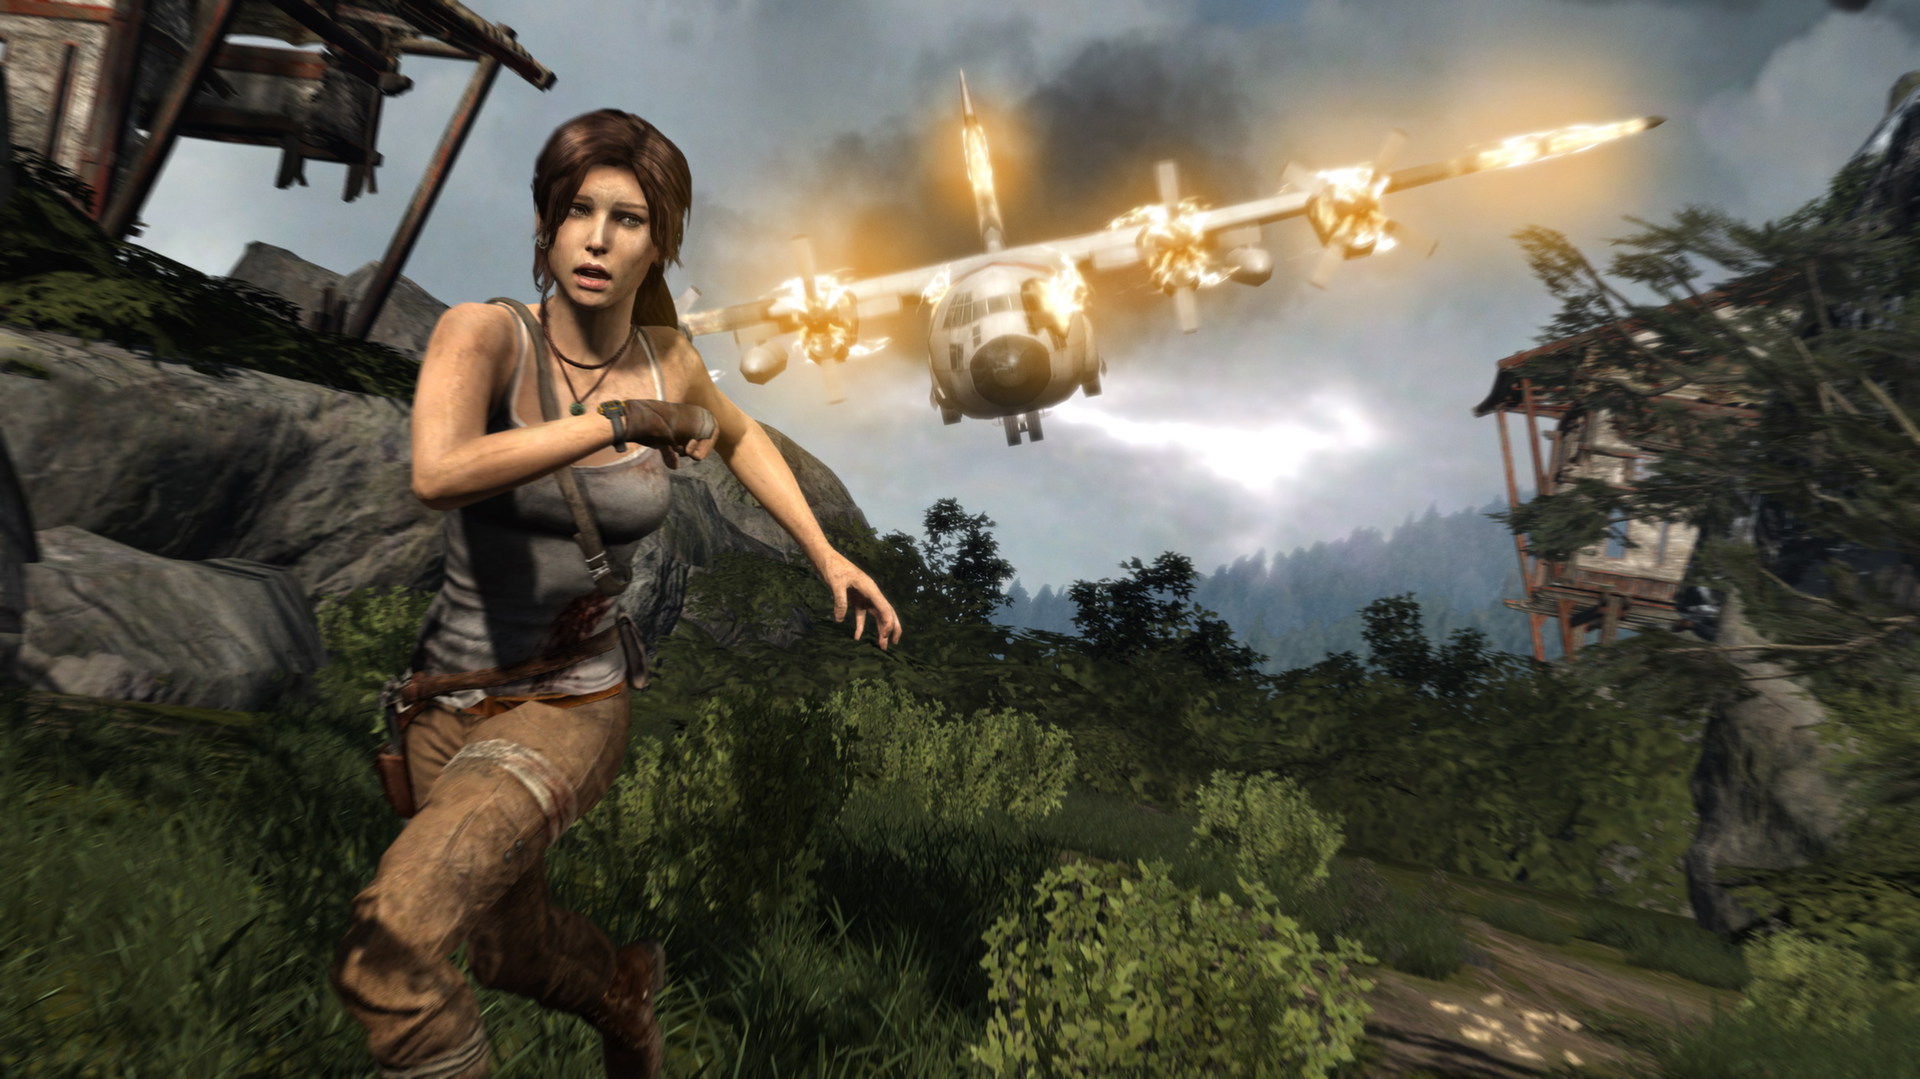 Tomb Raider on Steam